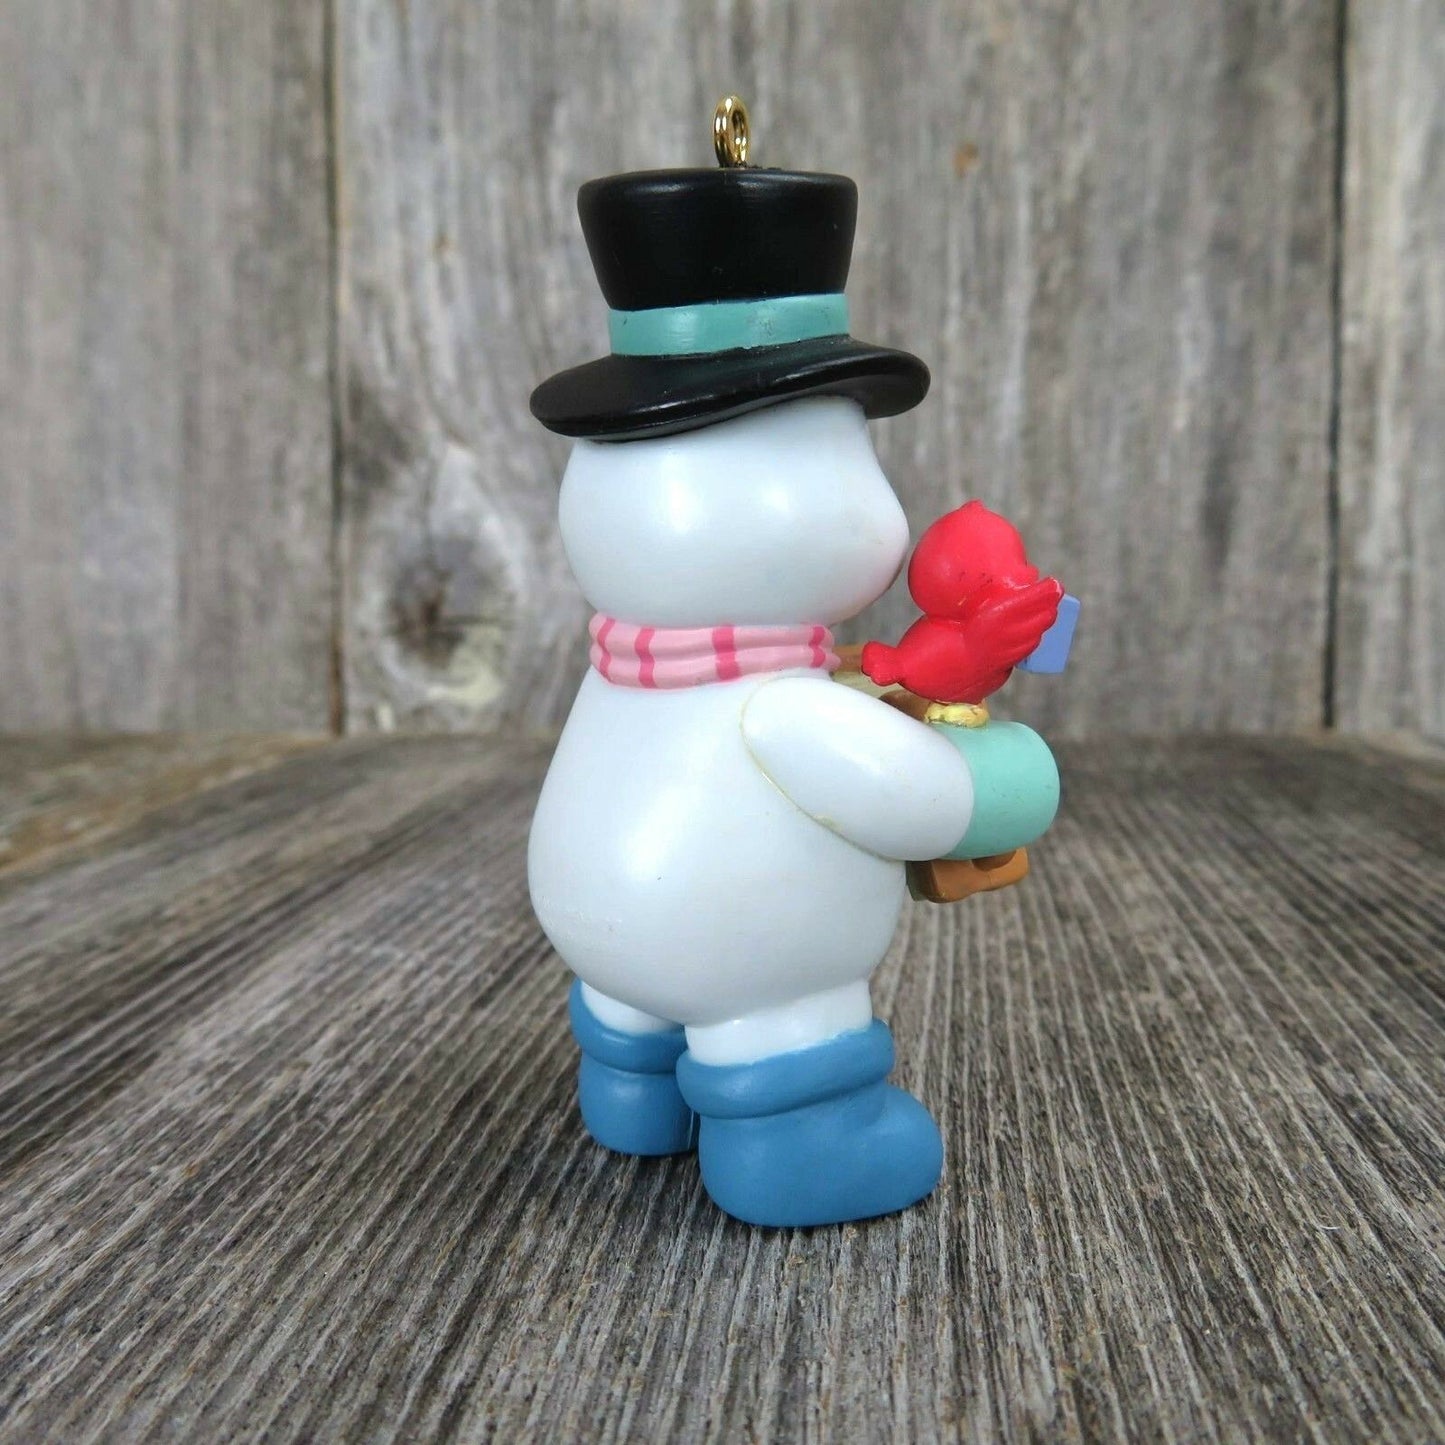 Snowman Caroling Ornament Vintage Accordion Music Top Hat Enesco Lustre Fame - At Grandma's Table